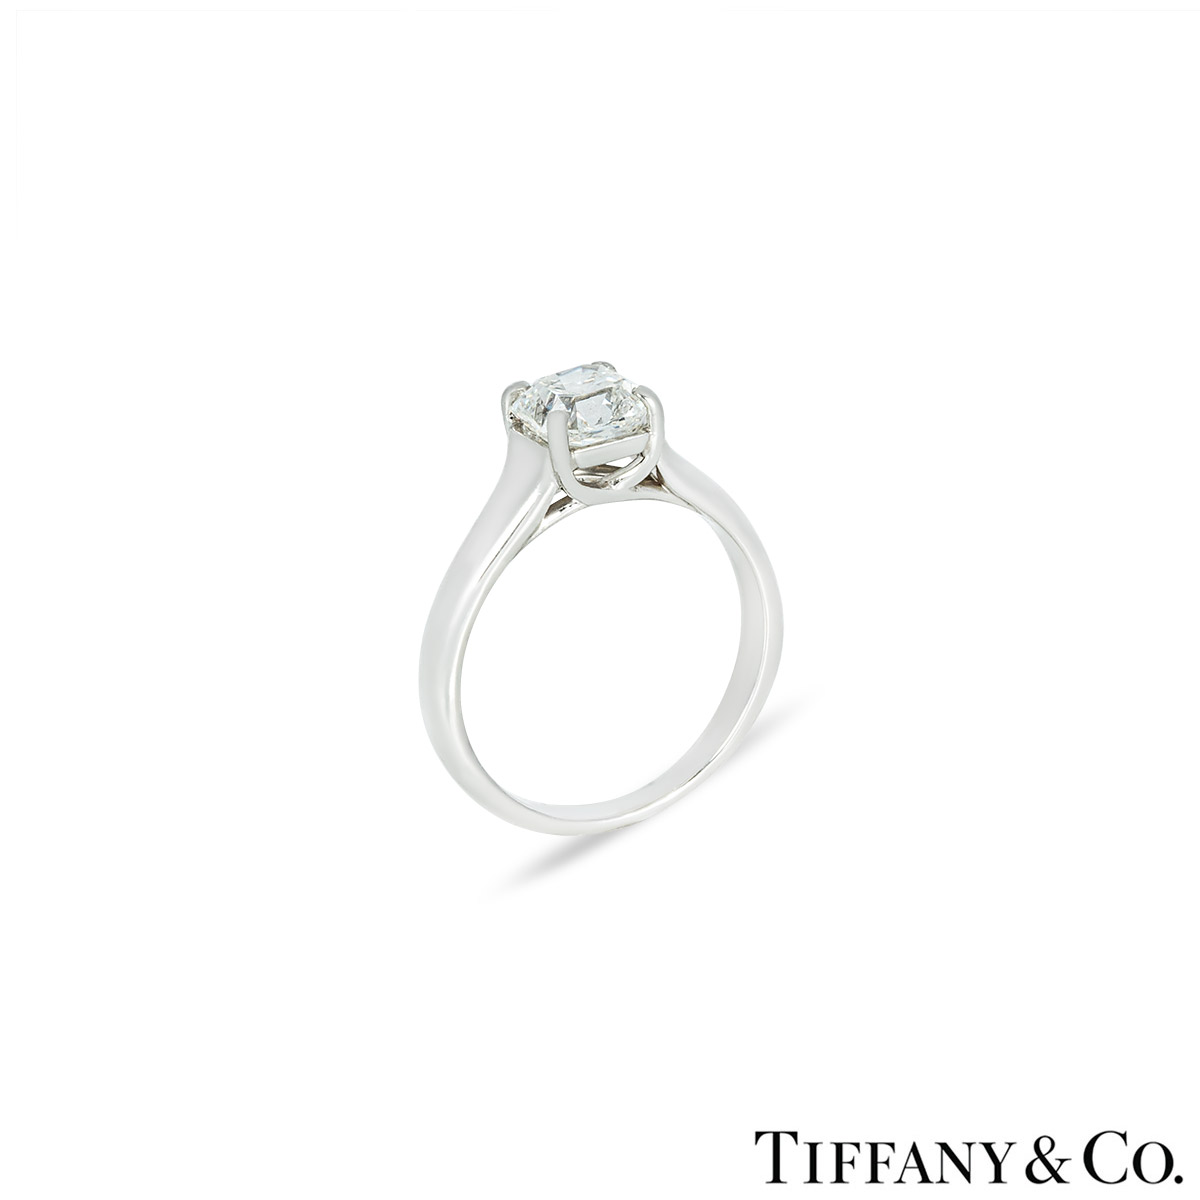 Tiffany & Co. Lucida Cut Diamond Ring 1.52ct G/VVS1